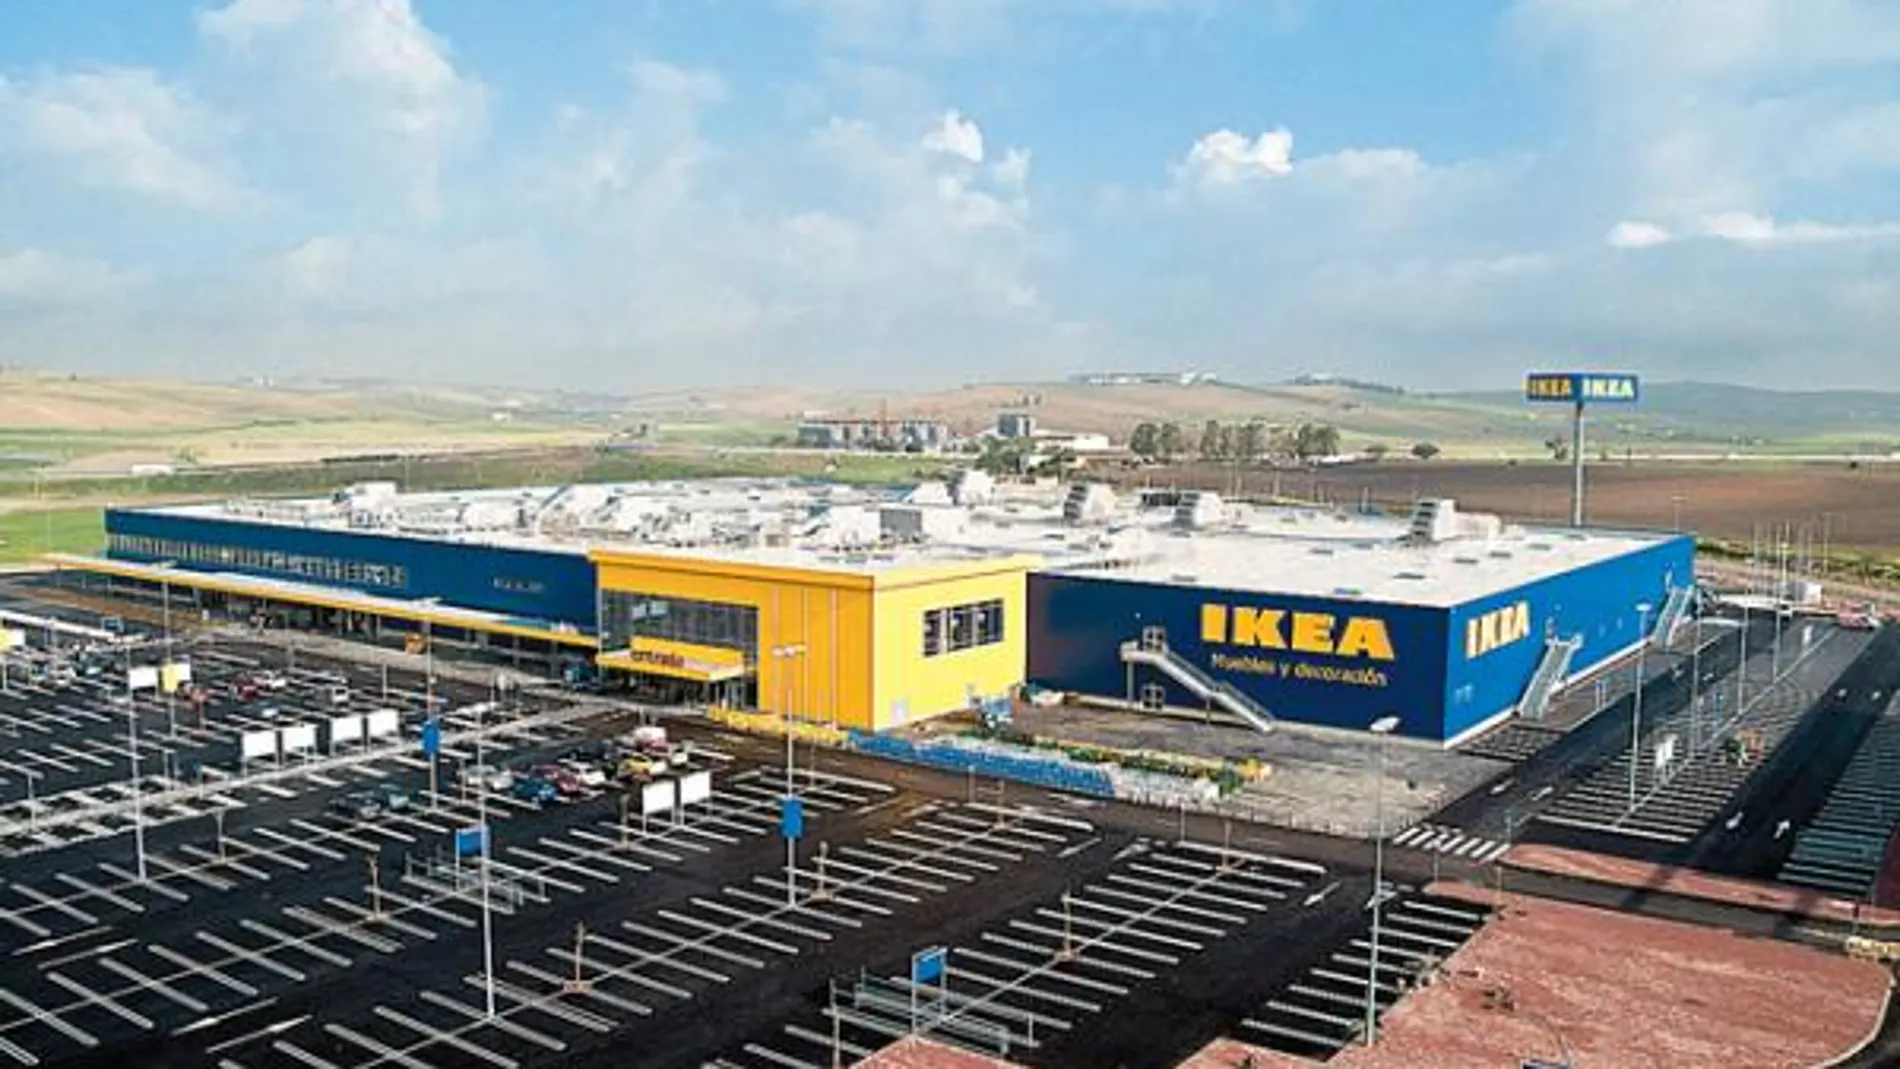 El Ikea de Jerez, primer centro comercial climatizado con geotermia